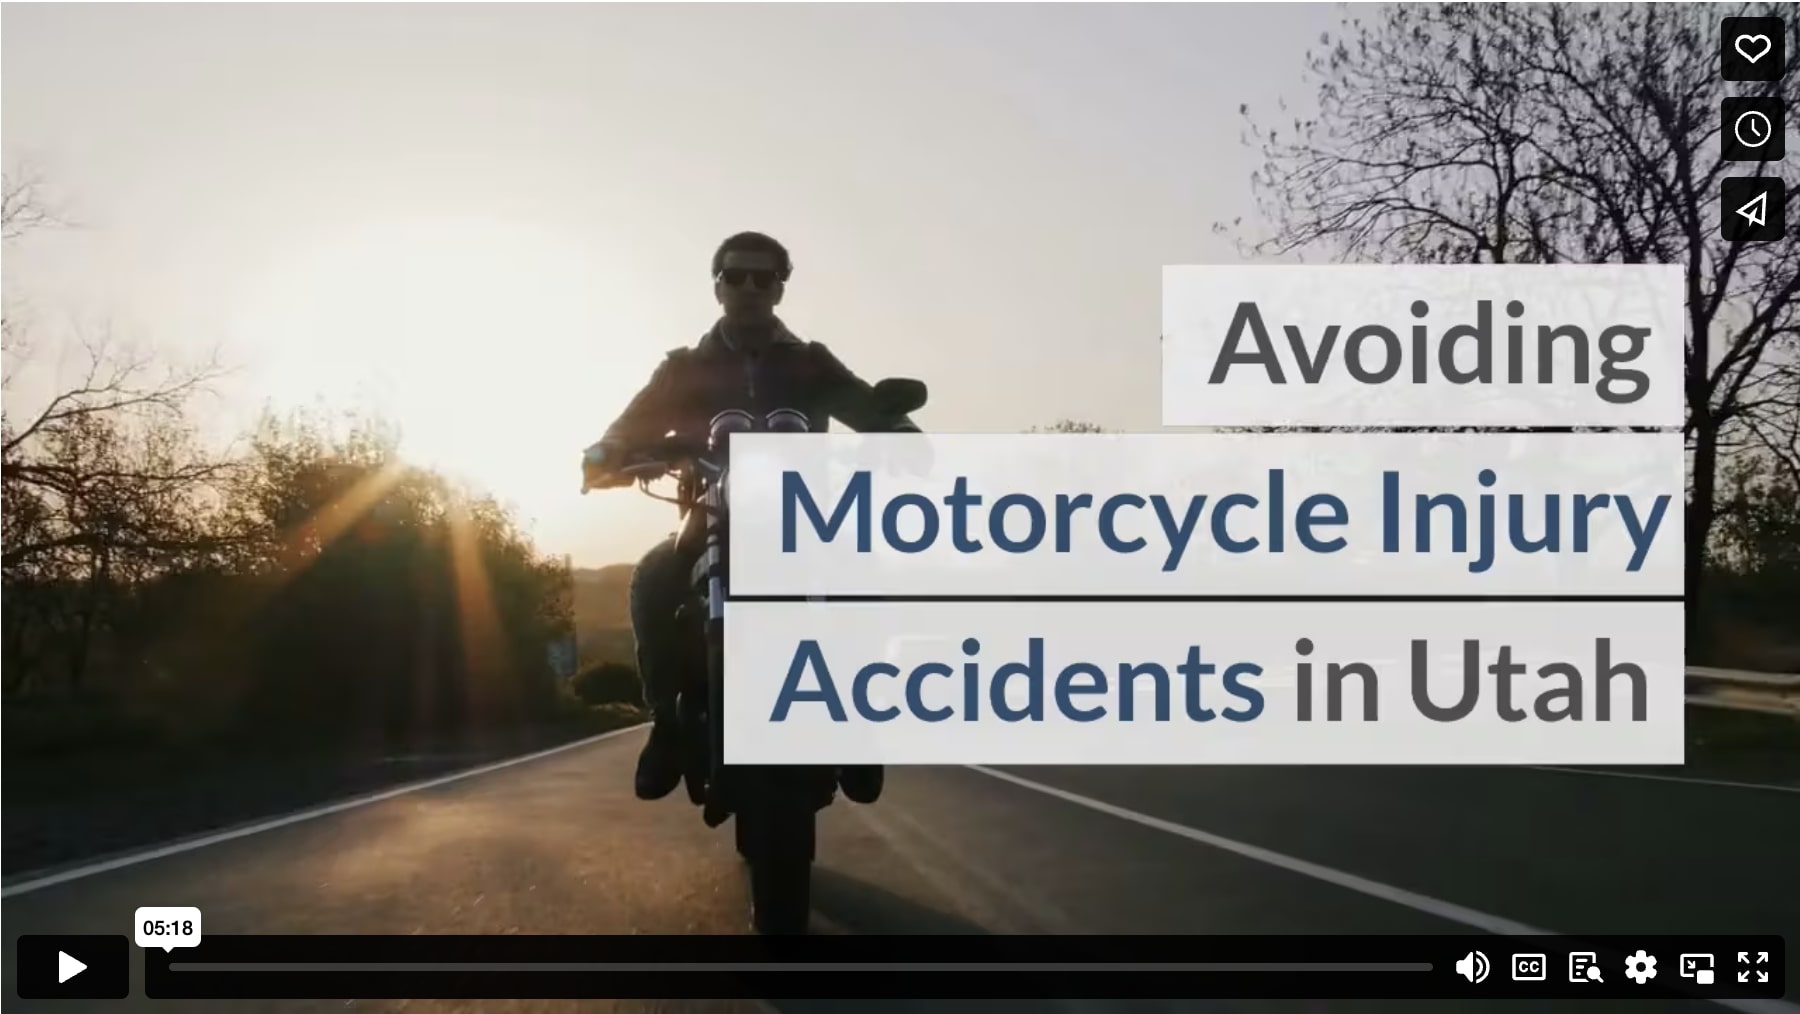 Avoiding Motorcycle Injury Accidents in Utah